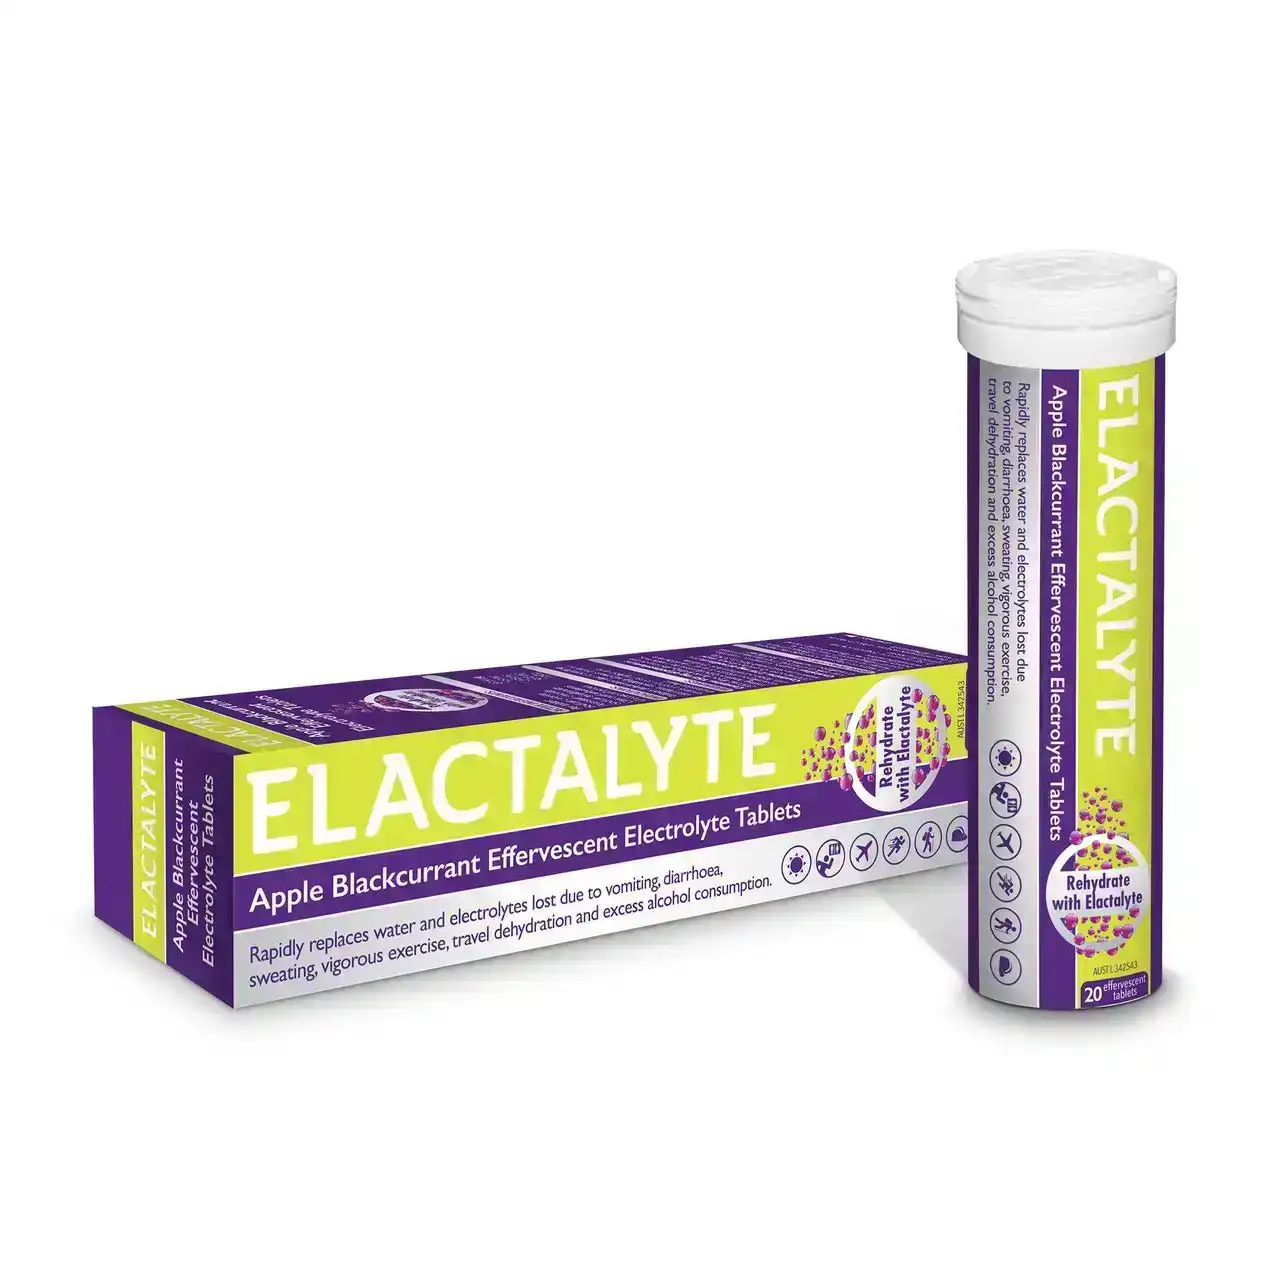 Elactalyte Apple Blackcurrant Effervescent Electrolyte 20 Tablets